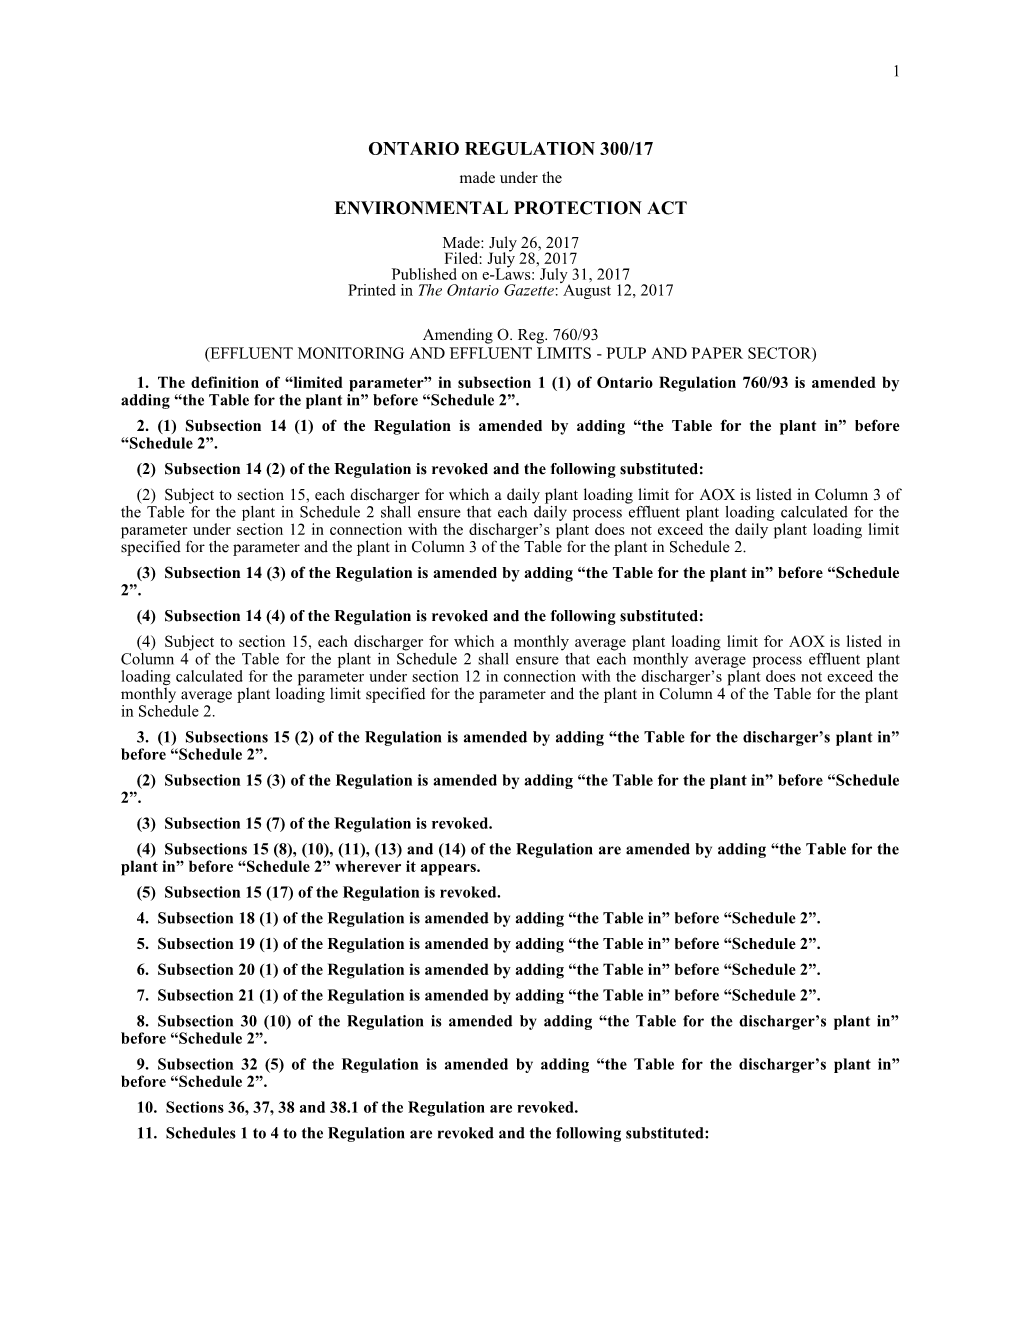 ENVIRONMENTAL PROTECTION ACT - O. Reg. 300/17